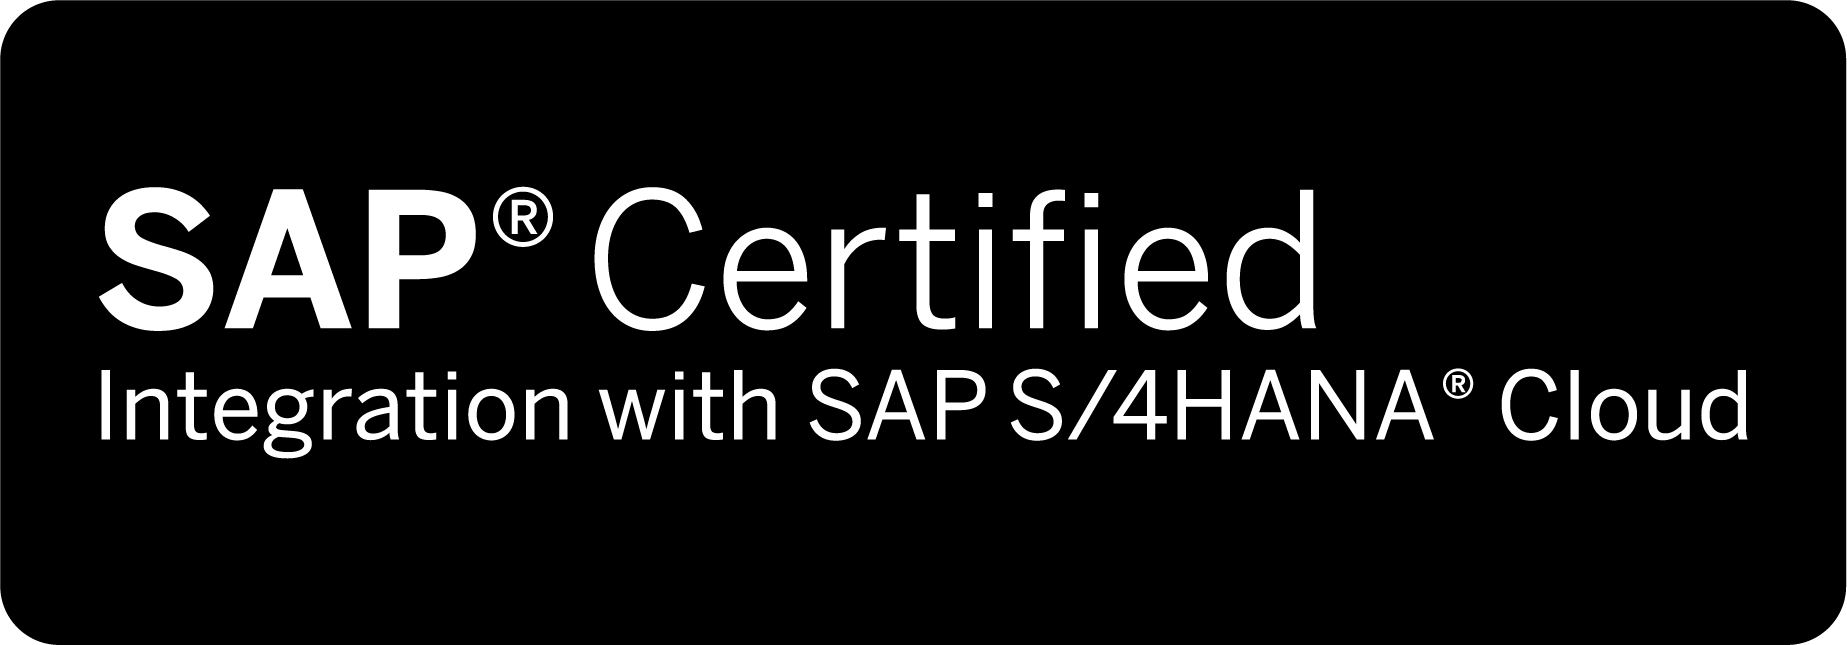 SAP Certified Integration with SAP S/4HANA Cloud